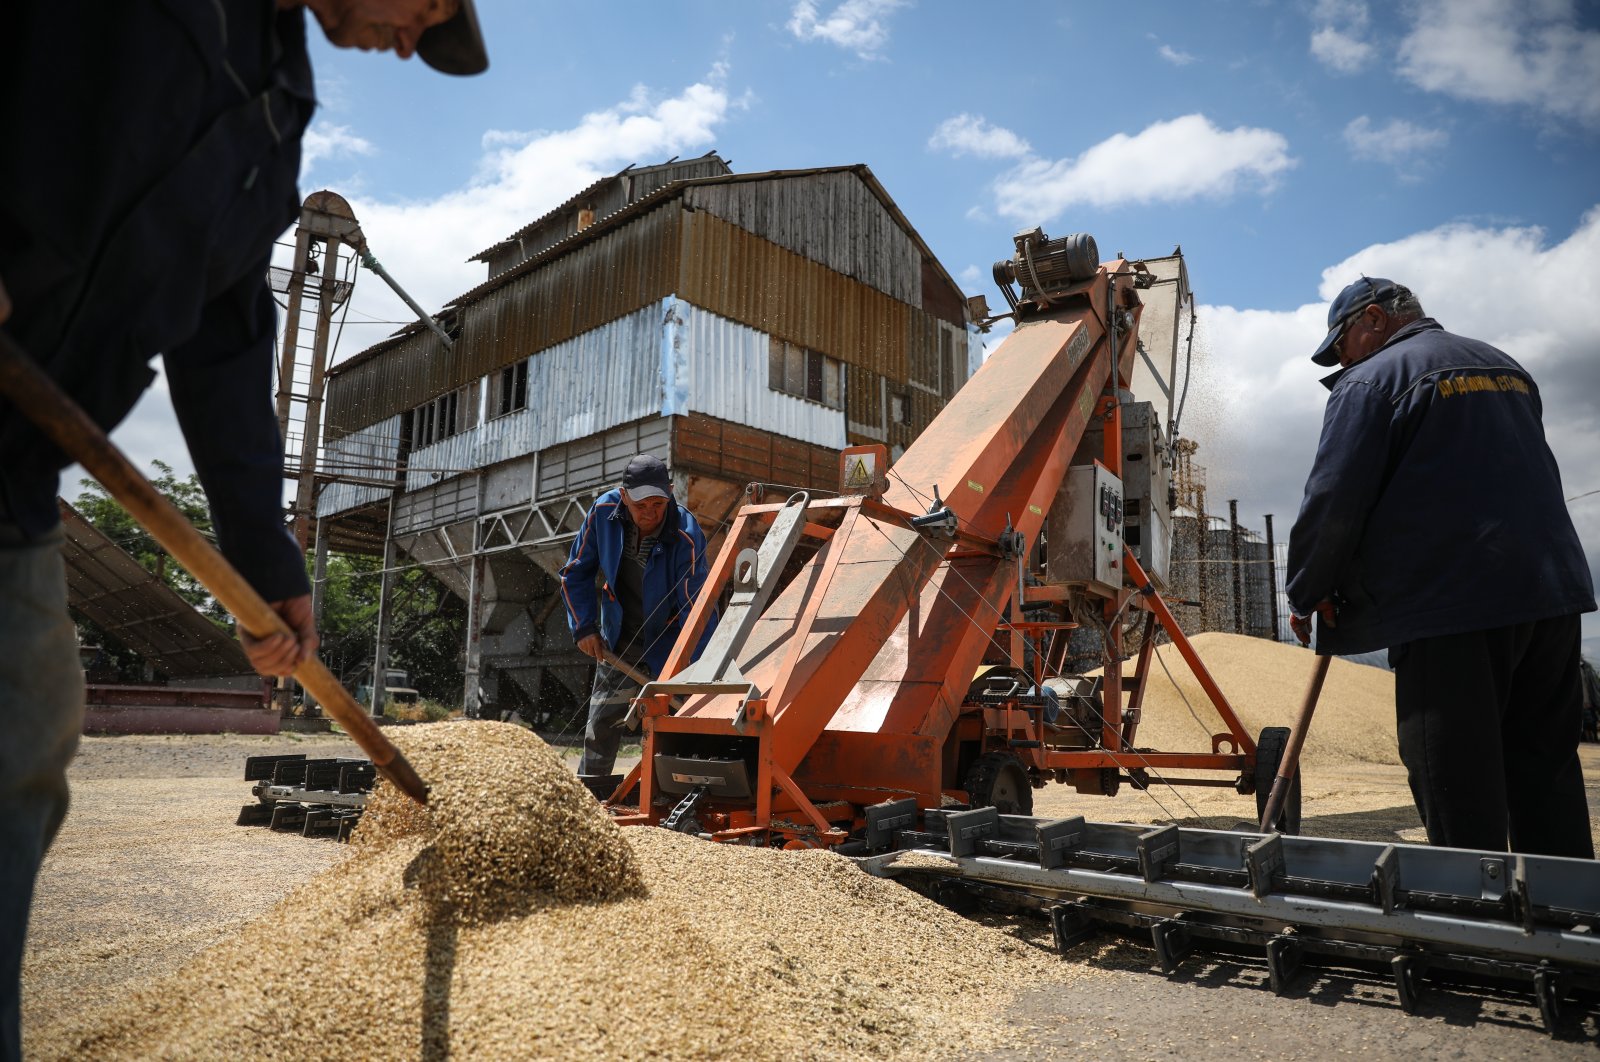 Ukrainian farmers load barley during harvest in the Odessa area, Ukraine, June 23, 2022. (EPA Photo)